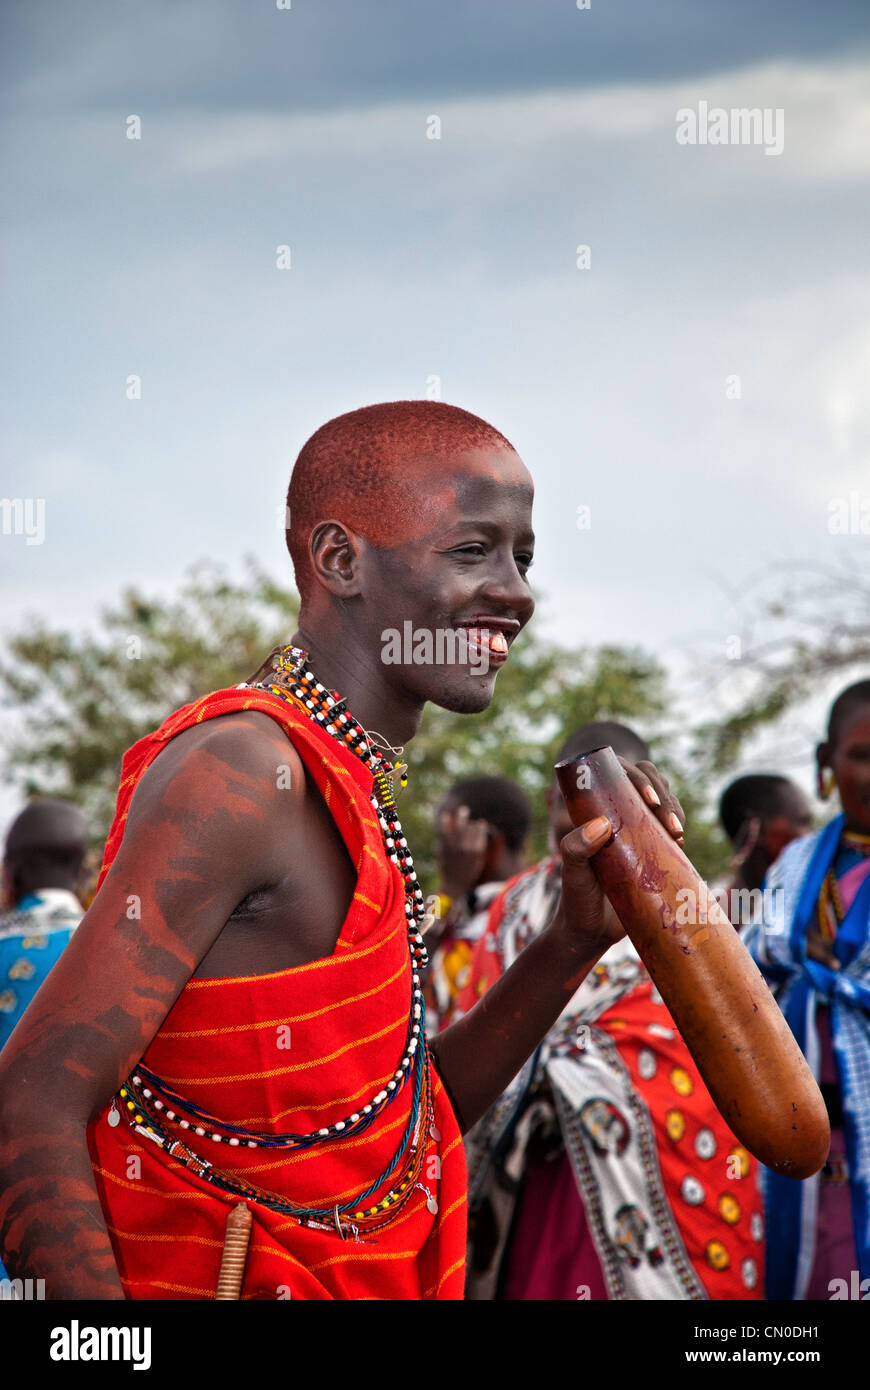 masai-man-wearing-colorful-traditional-c